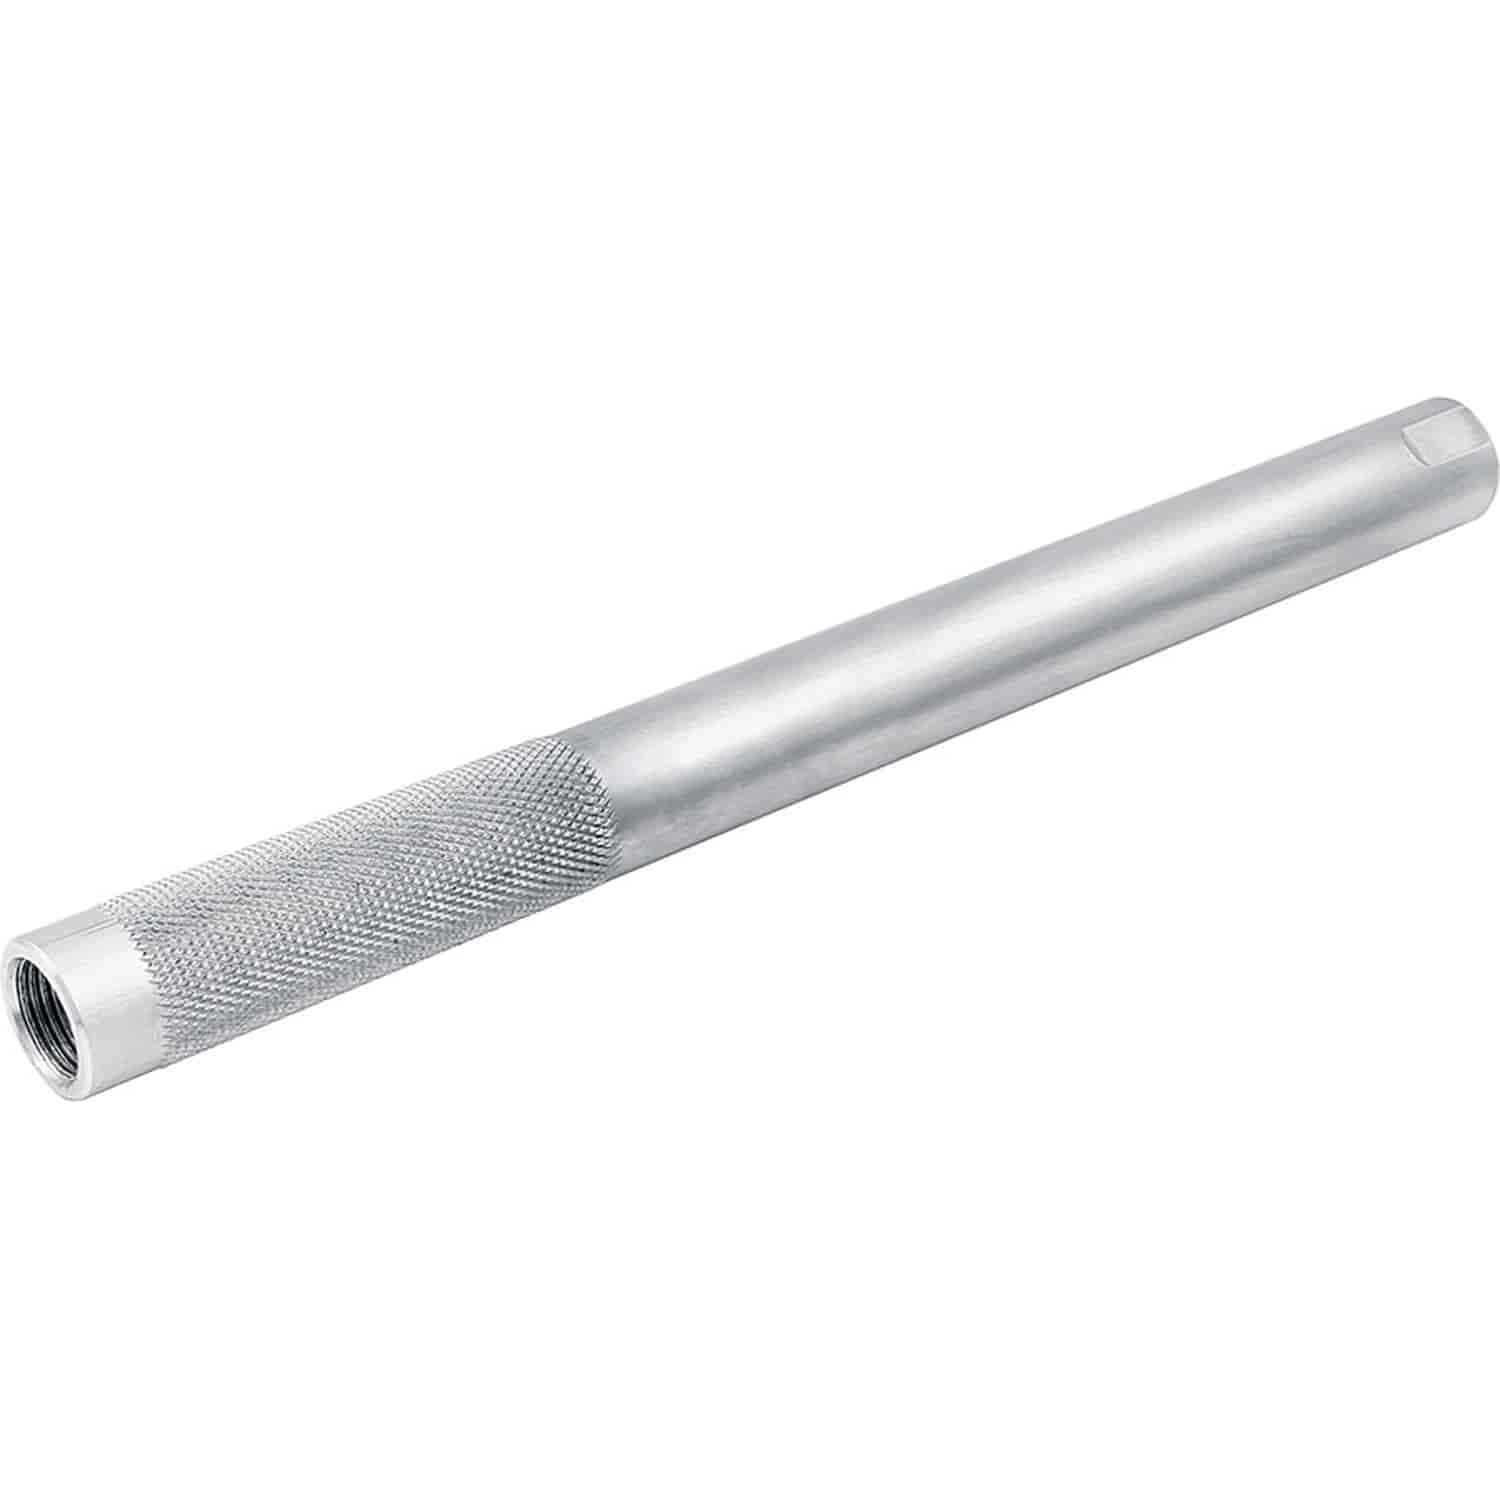 Swedged Aluminum Tie Rod Tube Length: 11